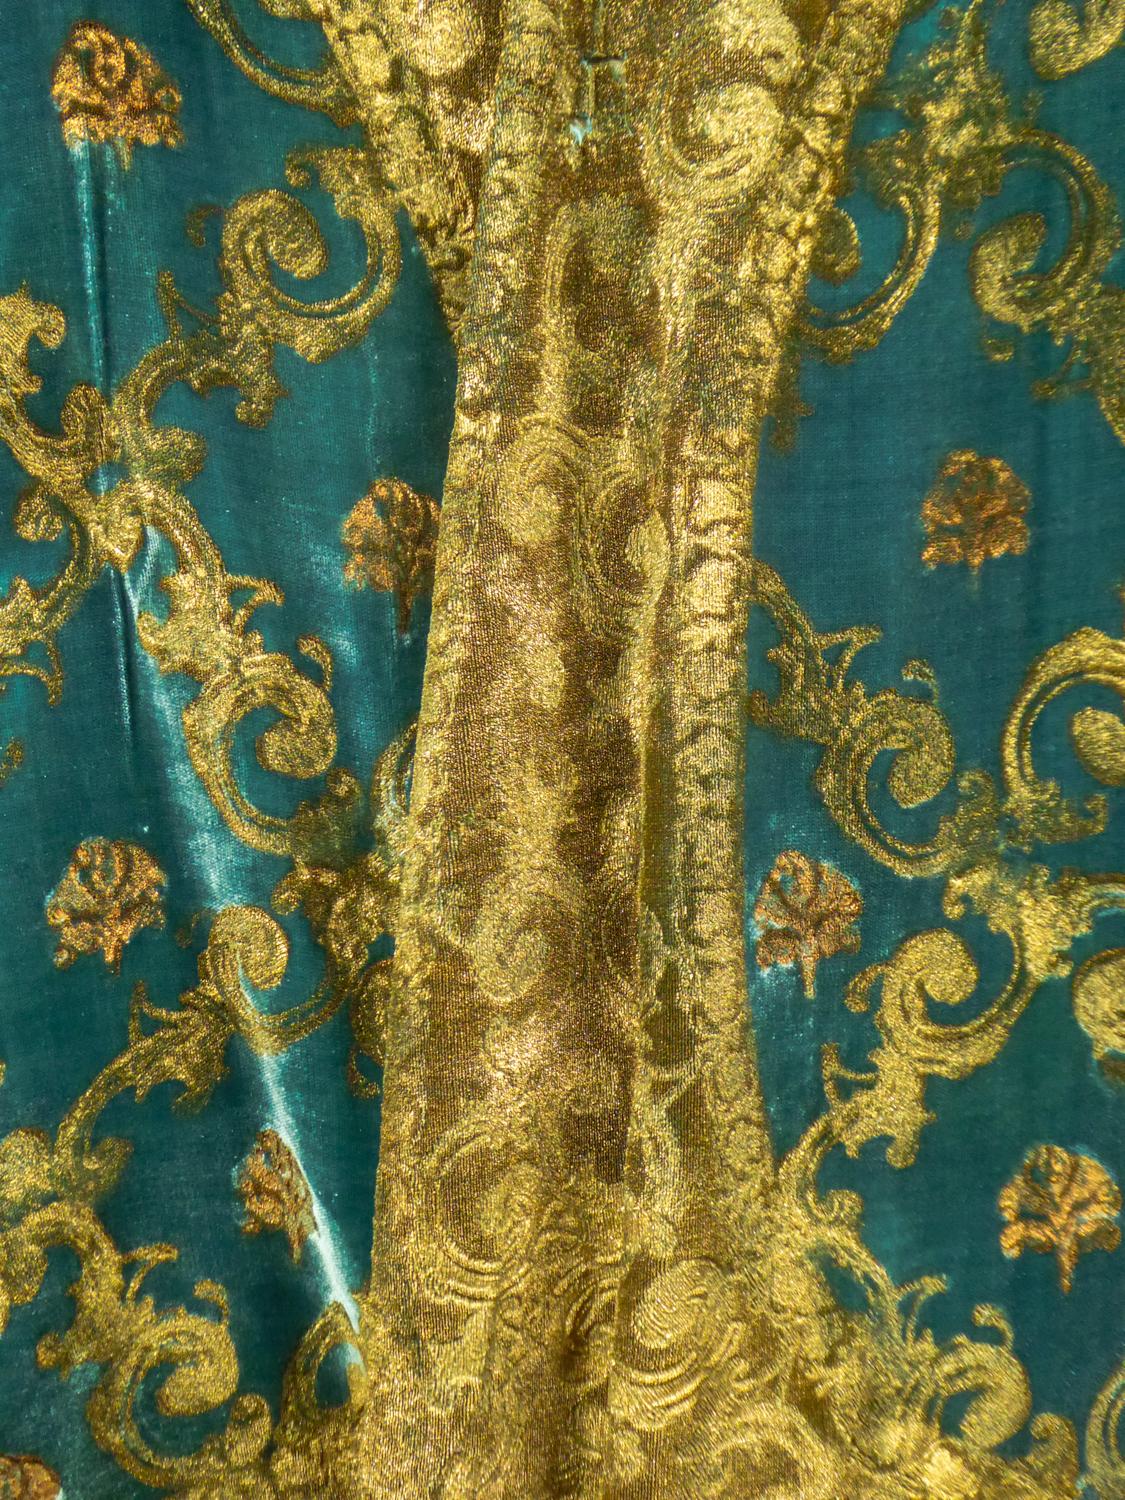 Women's Maria Monacci Gallenga Evening Jacket in Gold Painted Velvet Circa 1930